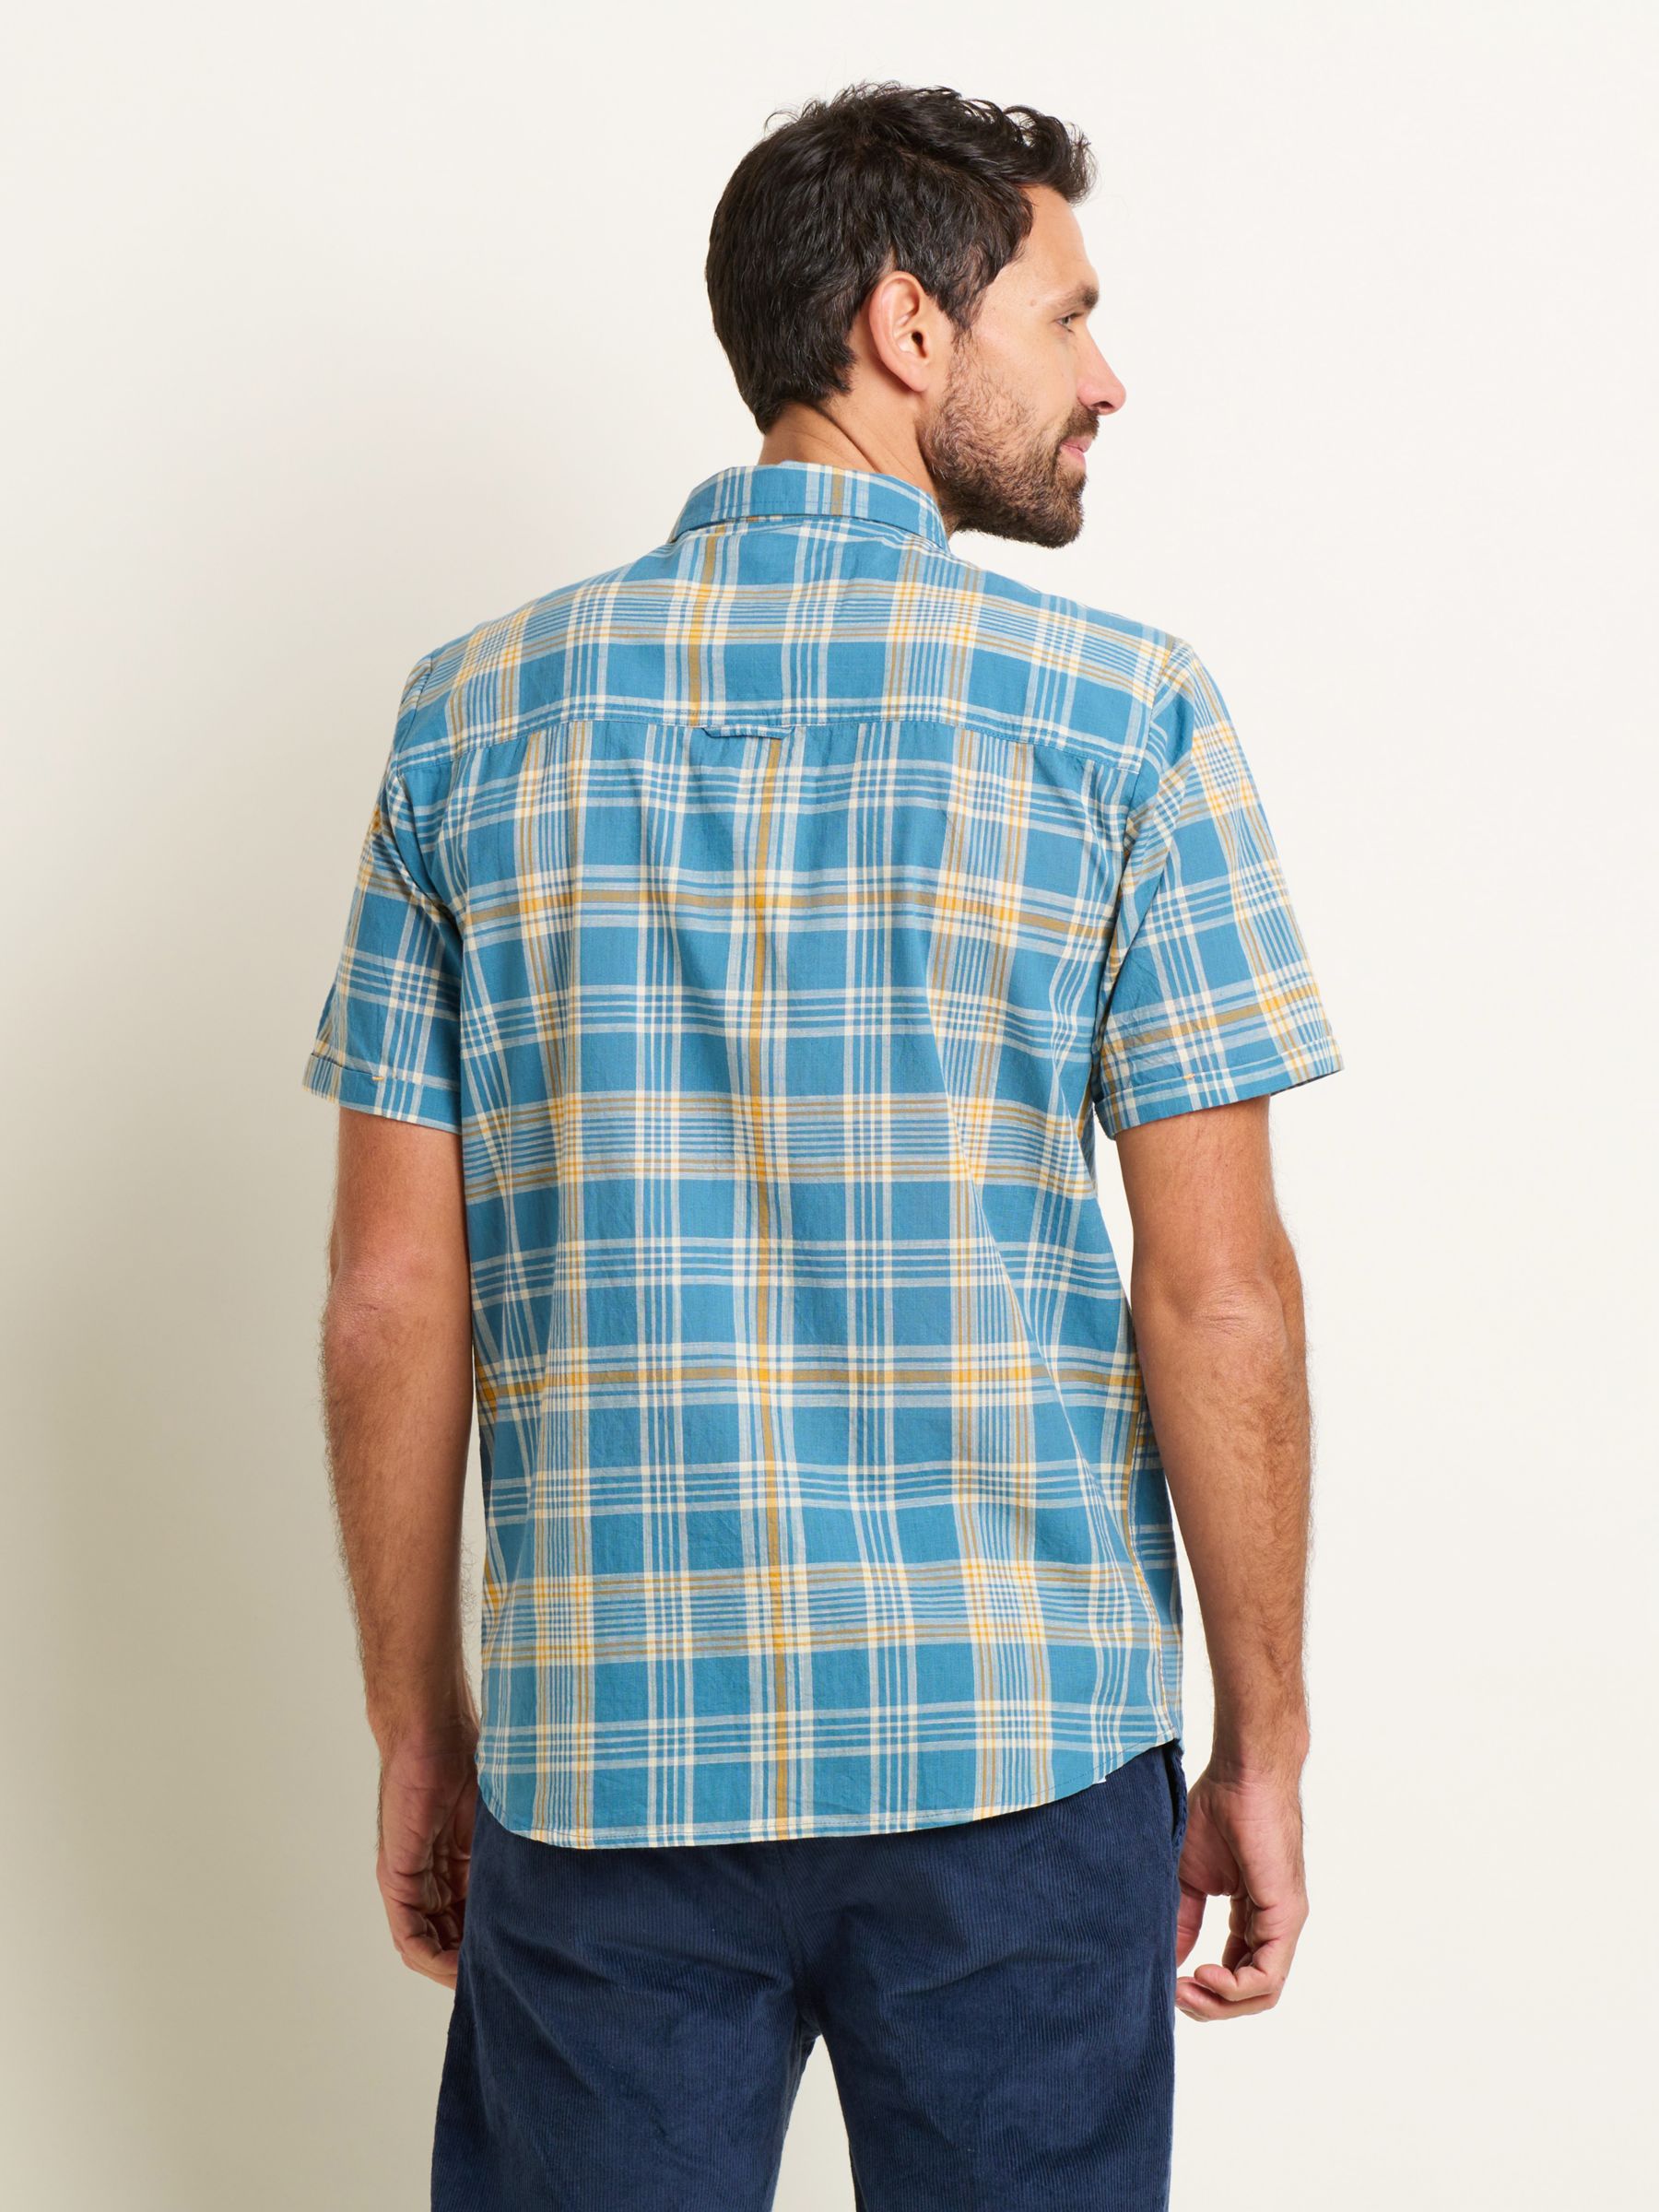 Brakeburn Check Cotton Short Sleeve Shirt, Blue/Yellow, L